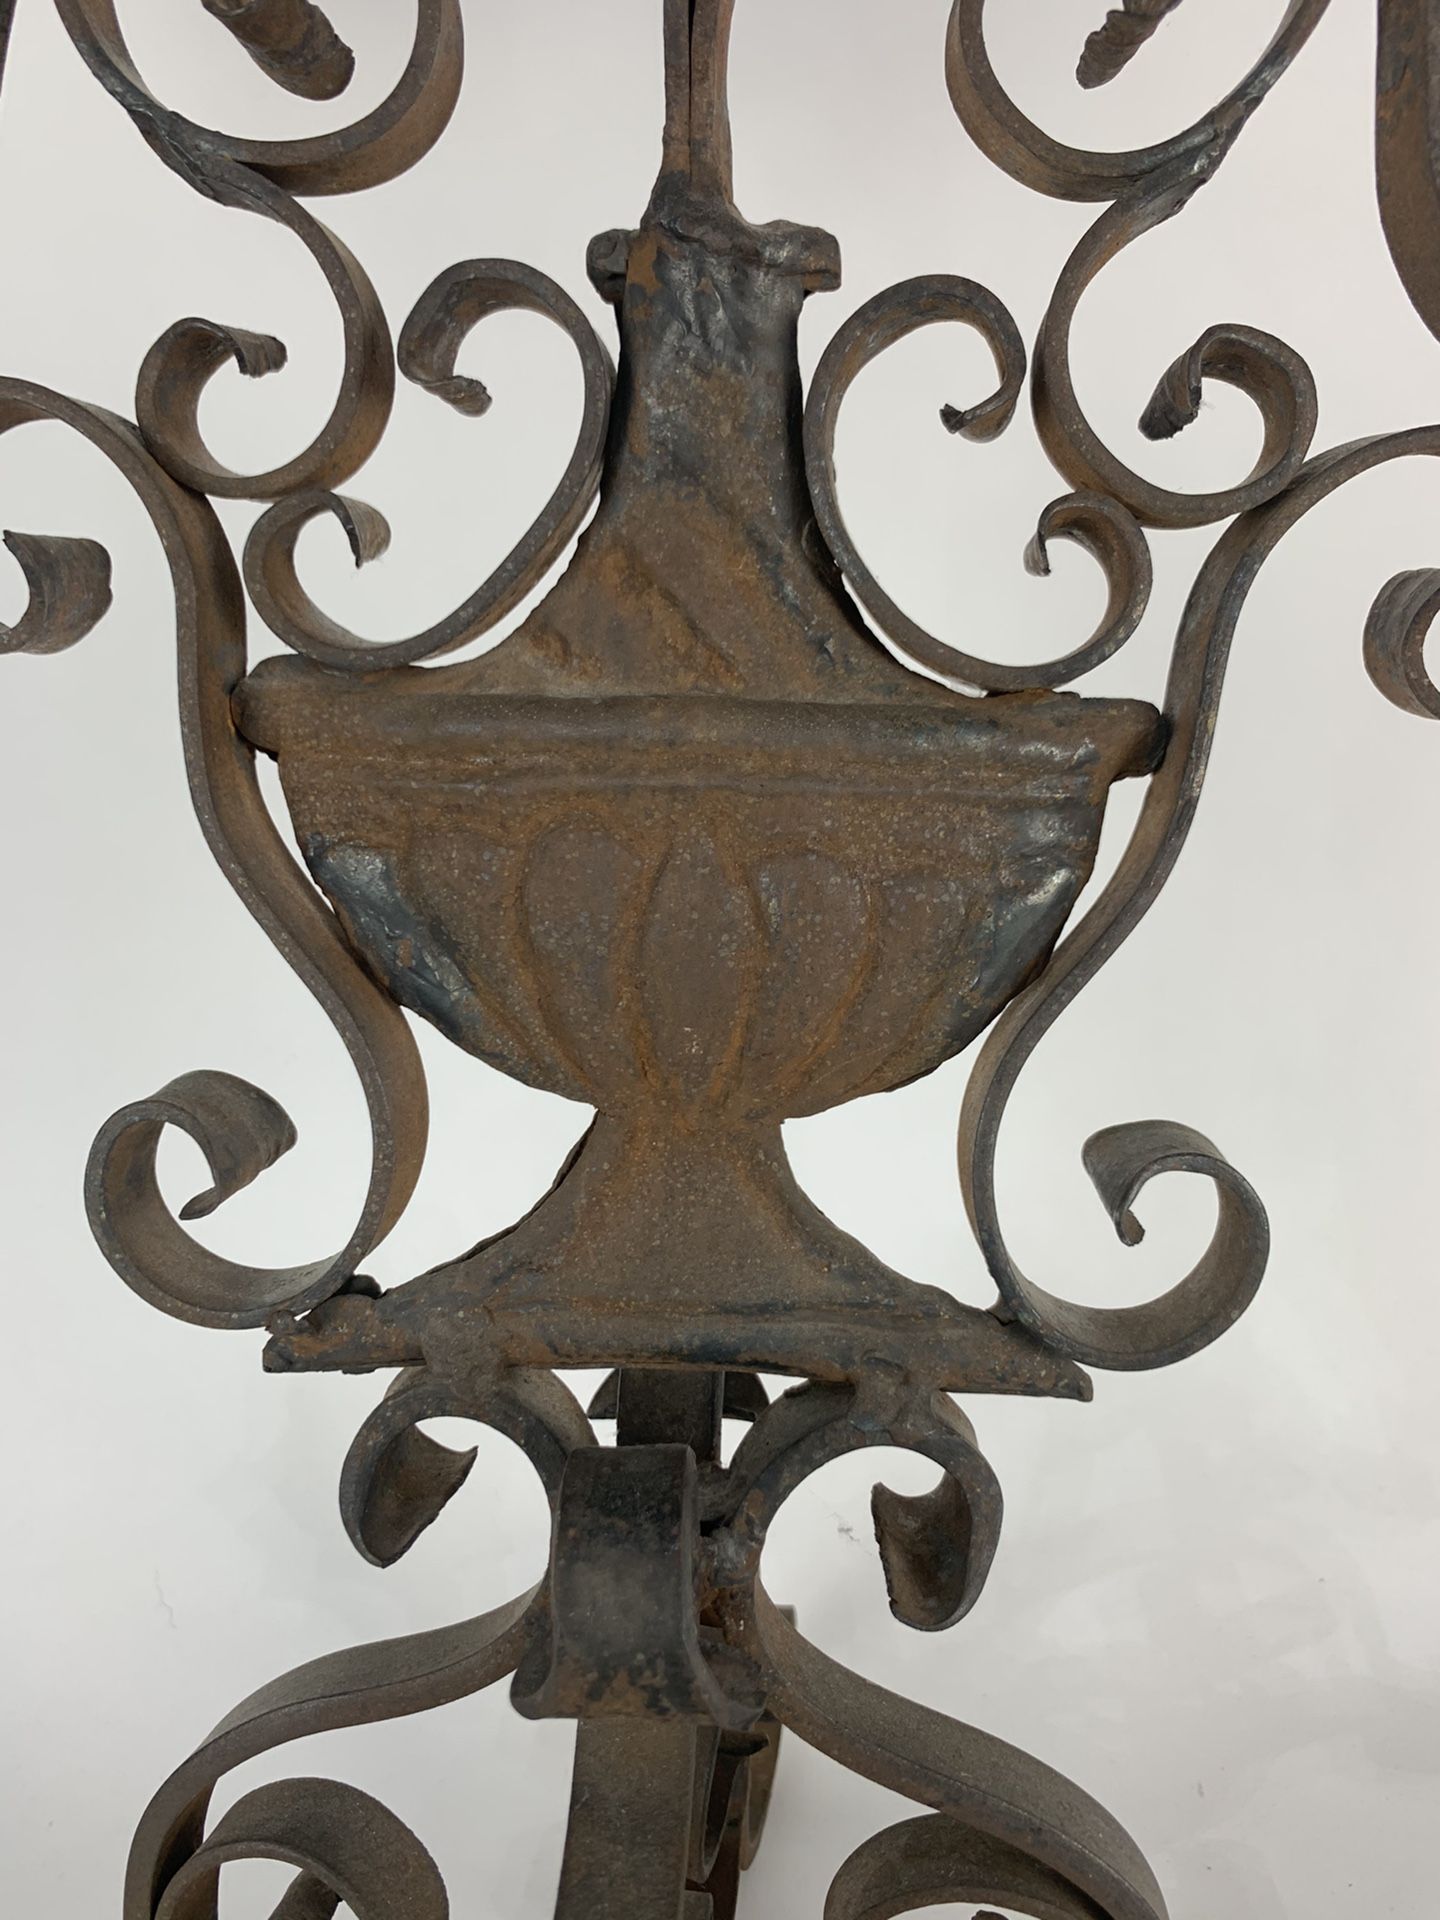 Spanish Revival style candelabra